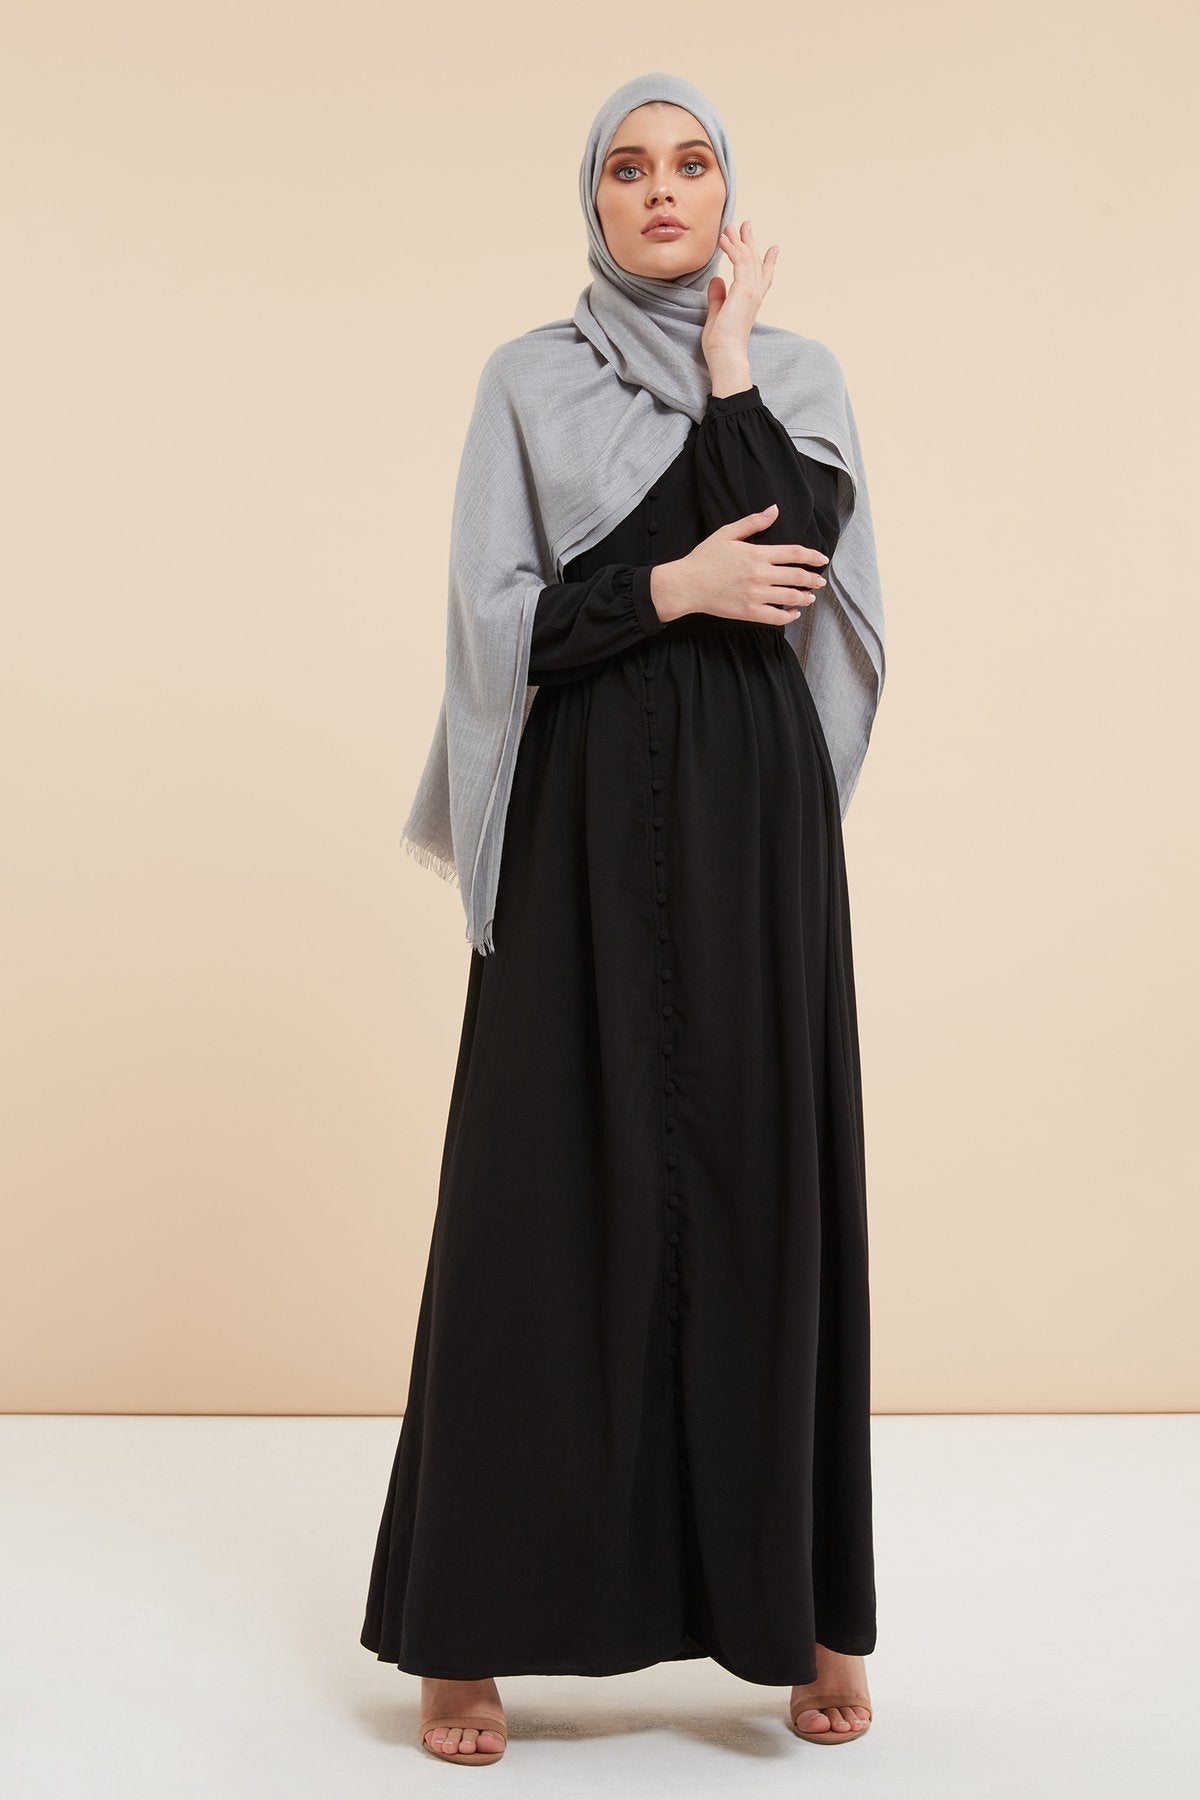 Abaya Designs We Love – CAVE